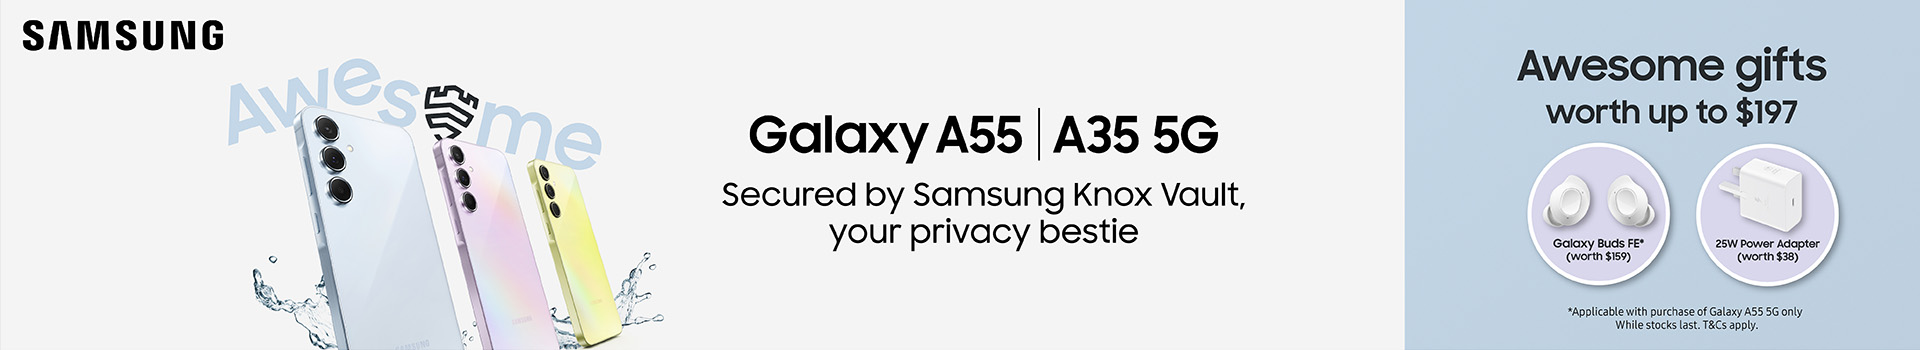 Samsung Galaxy A35 and A55